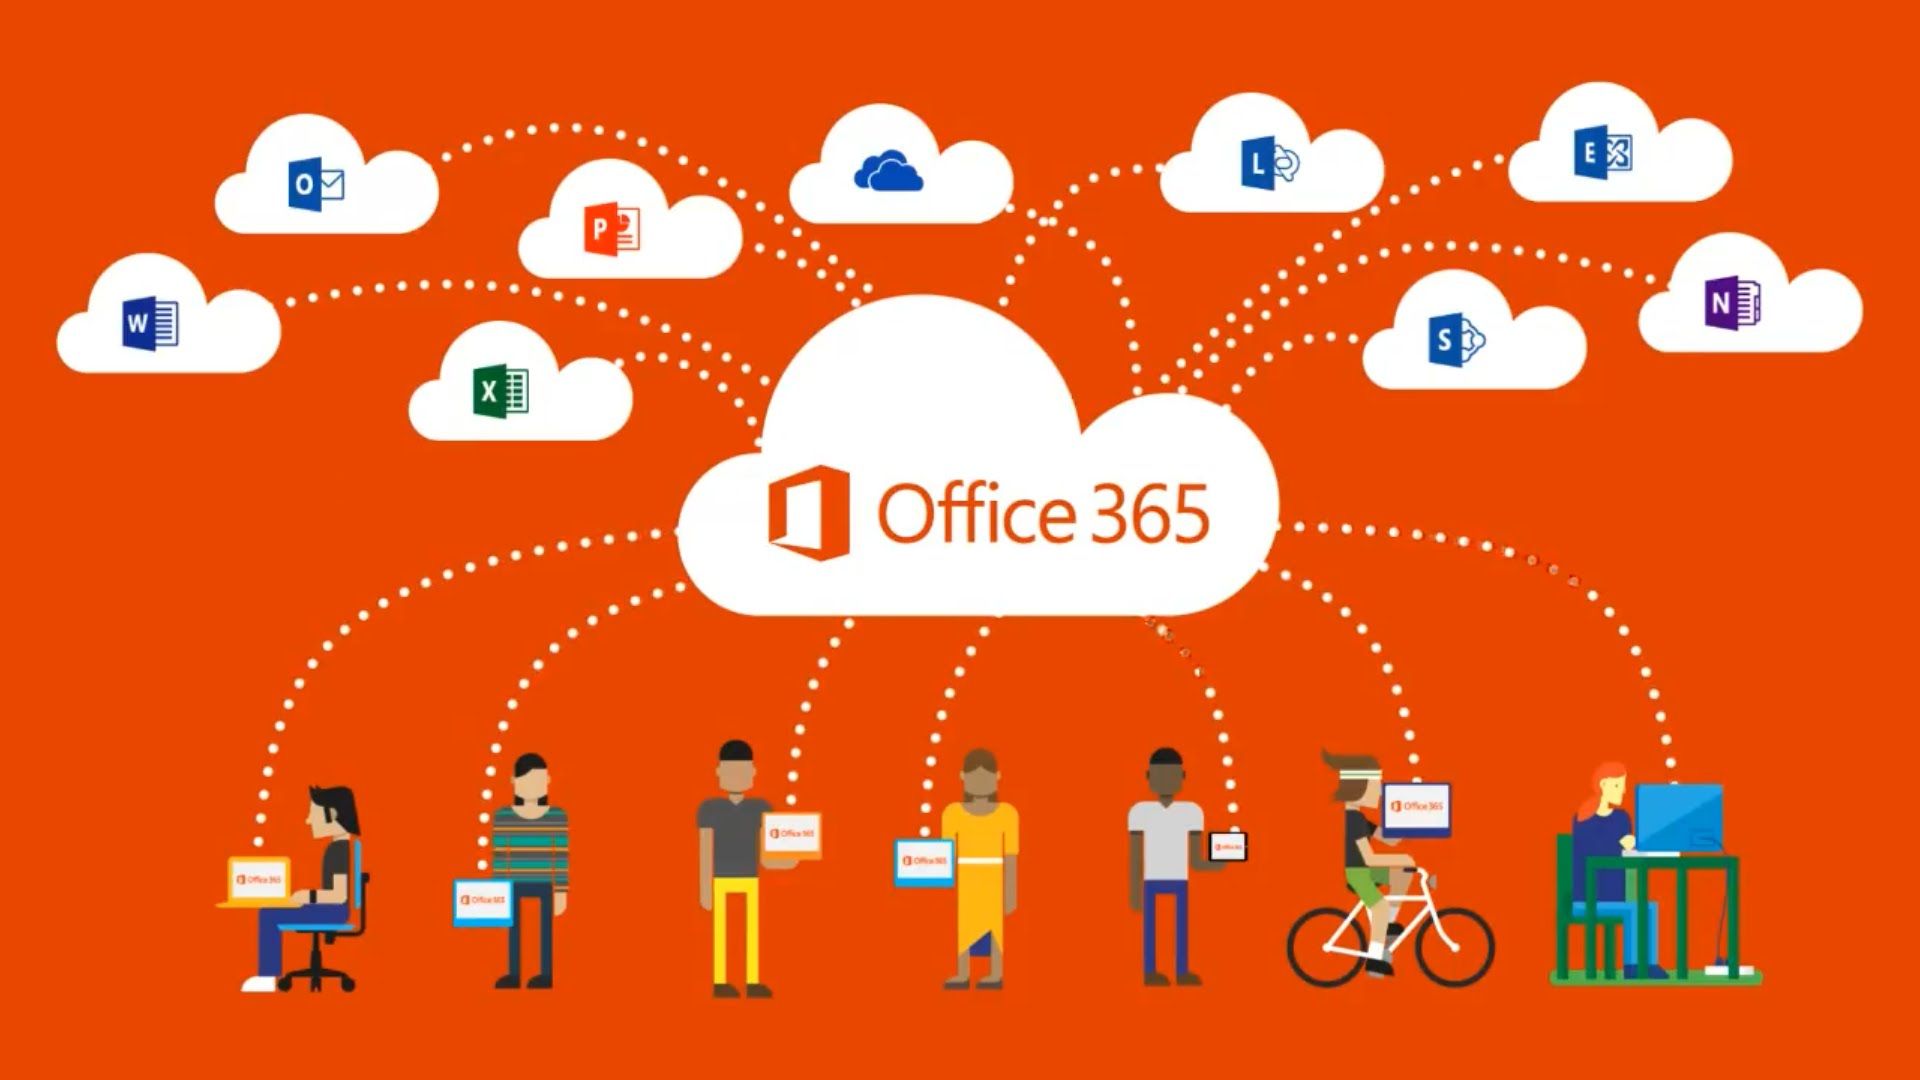 Ricoh Office 365